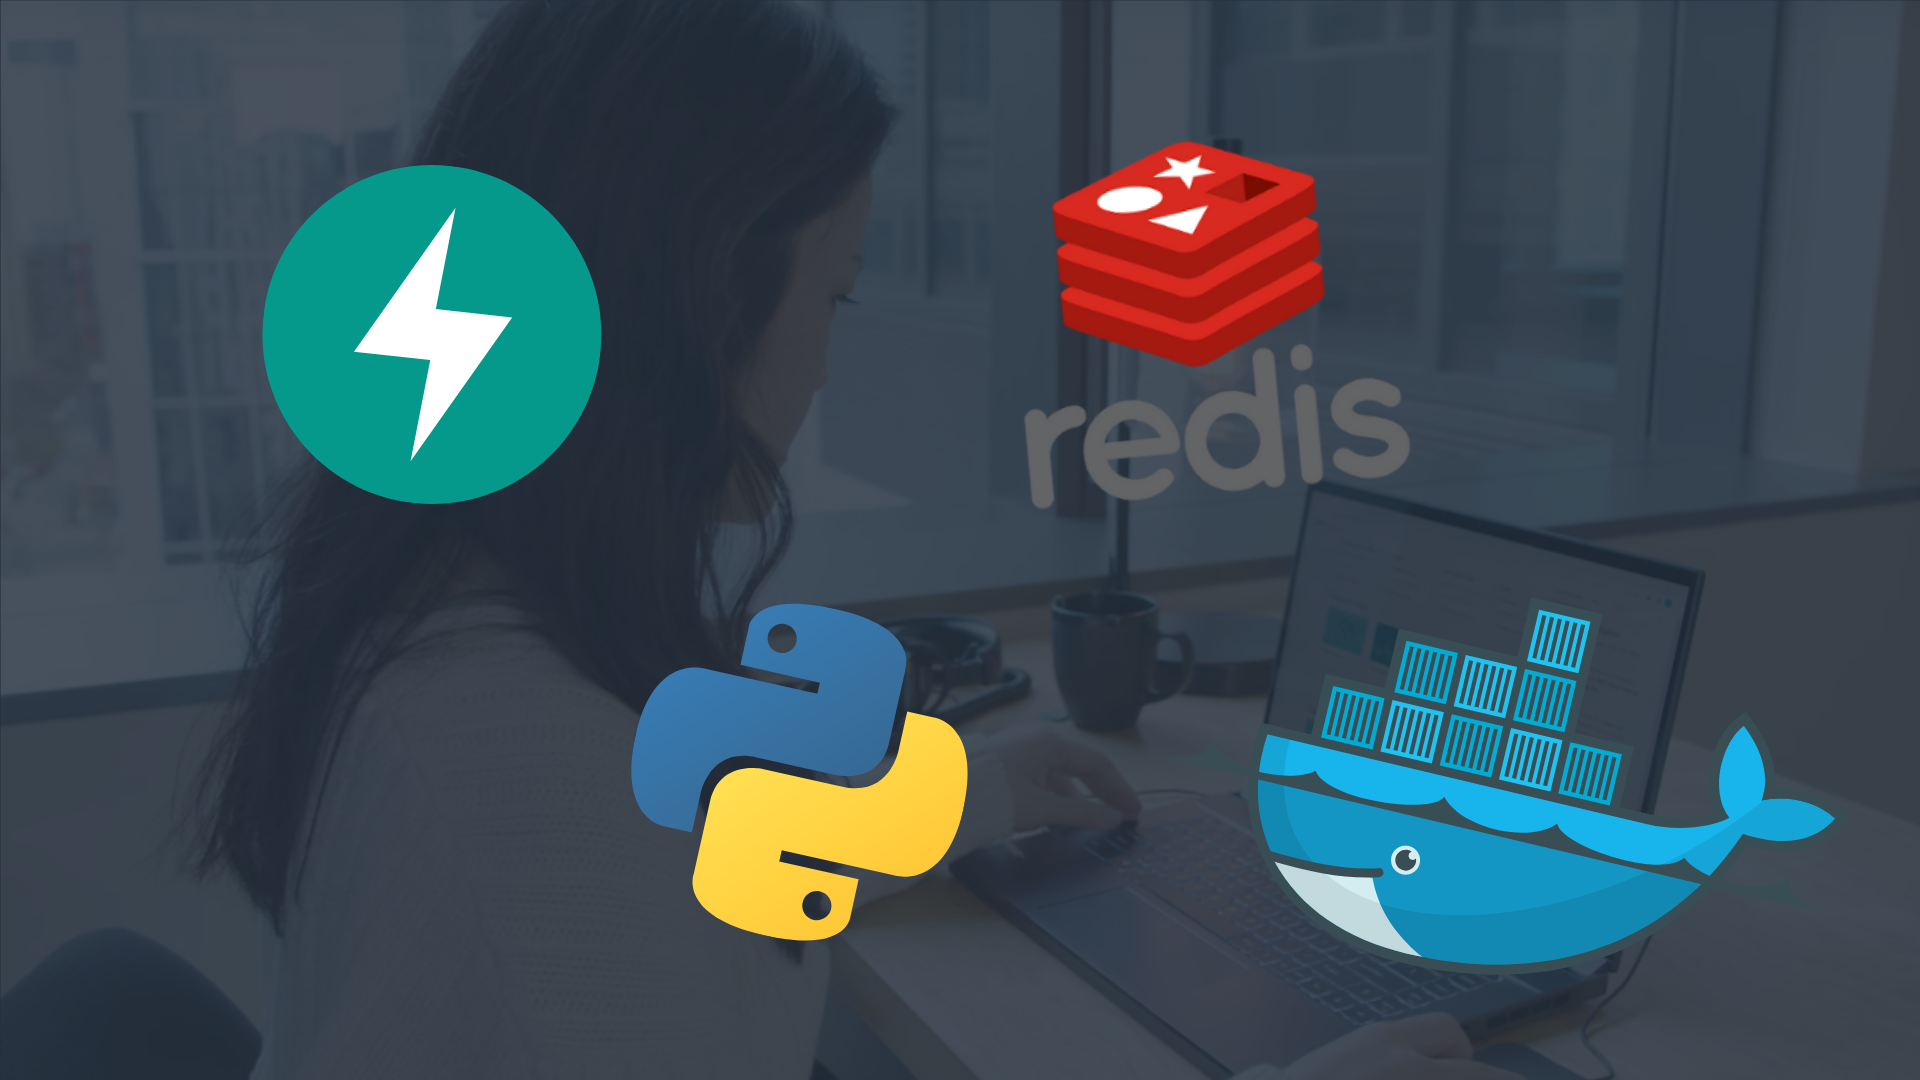 透過 Docker 打包 FastAPI 與 Redis 的服務串流